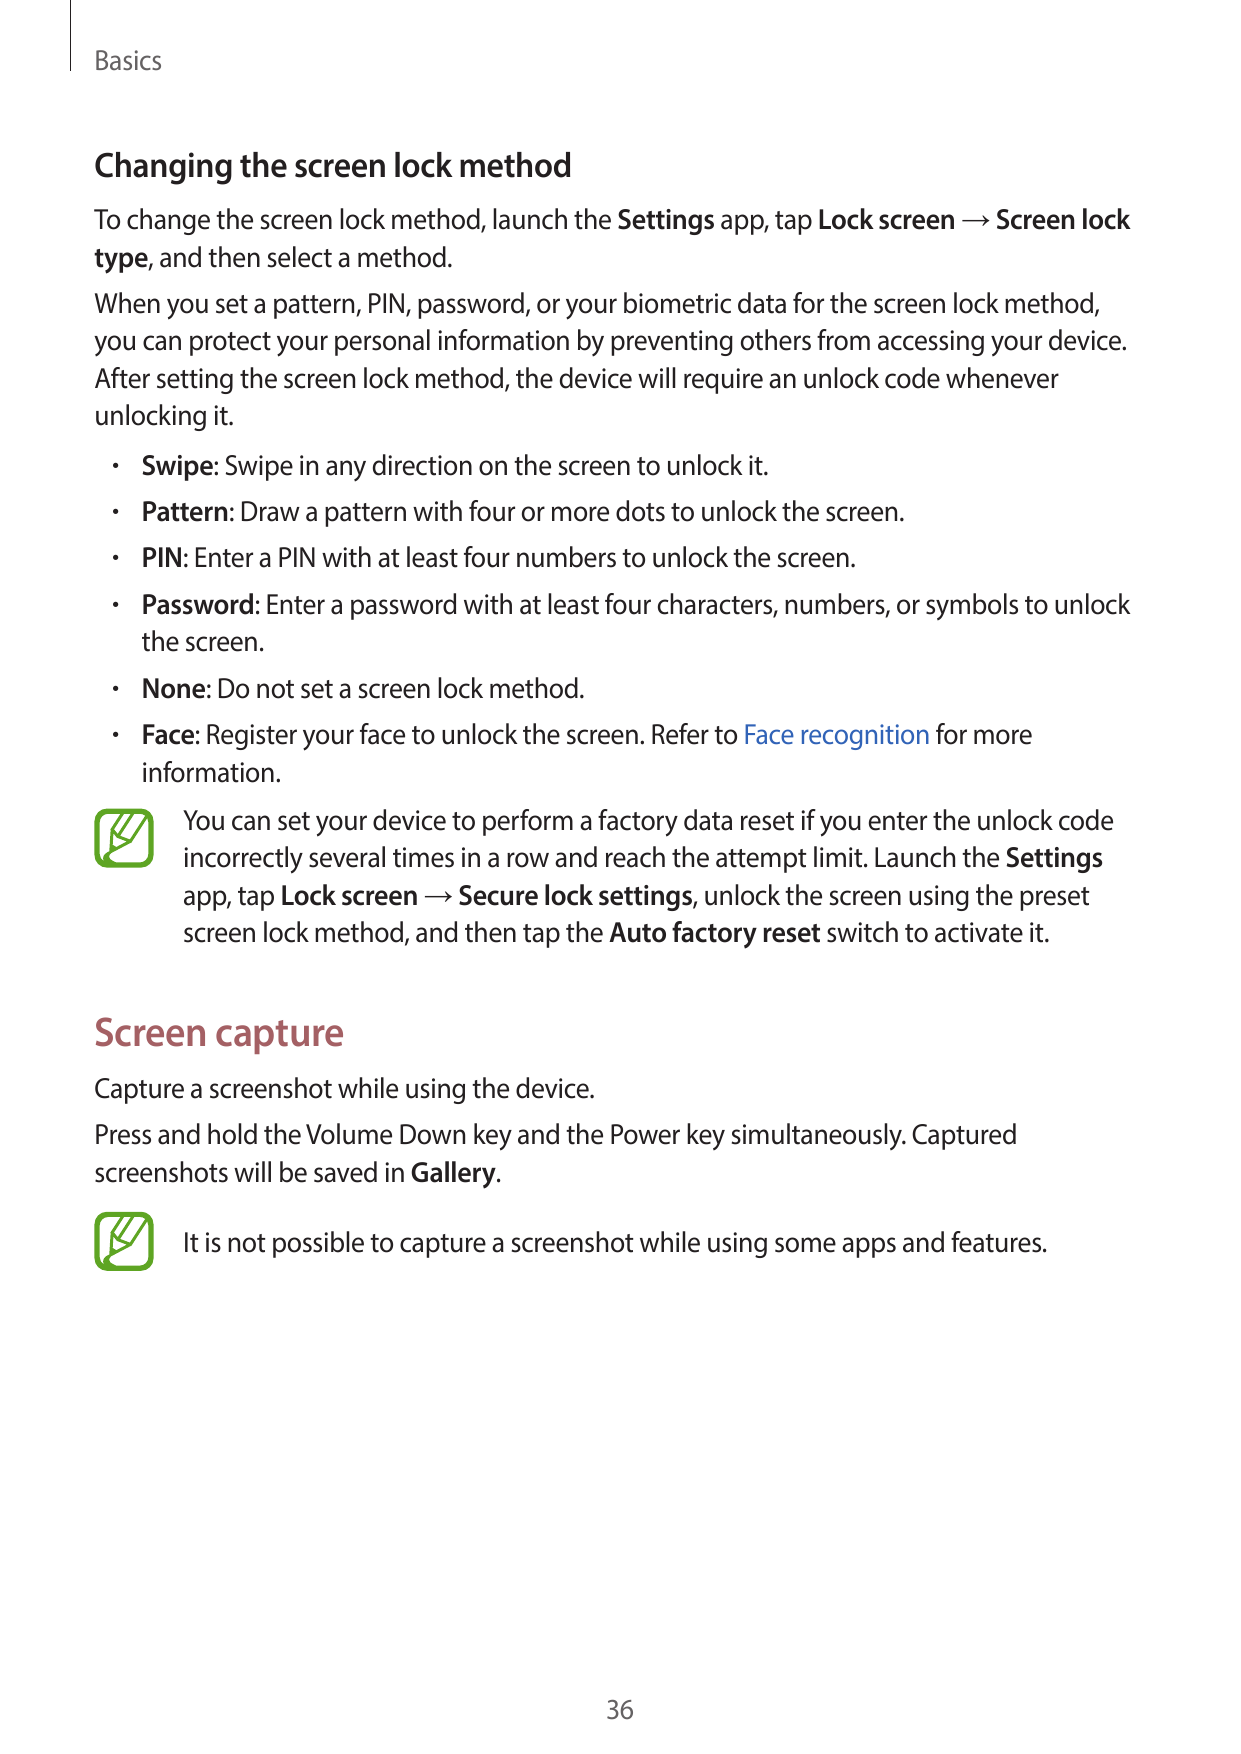 BasicsChanging the screen lock methodTo change the screen lock method, launch the Settings app, tap Lock screen → Screen locktyp